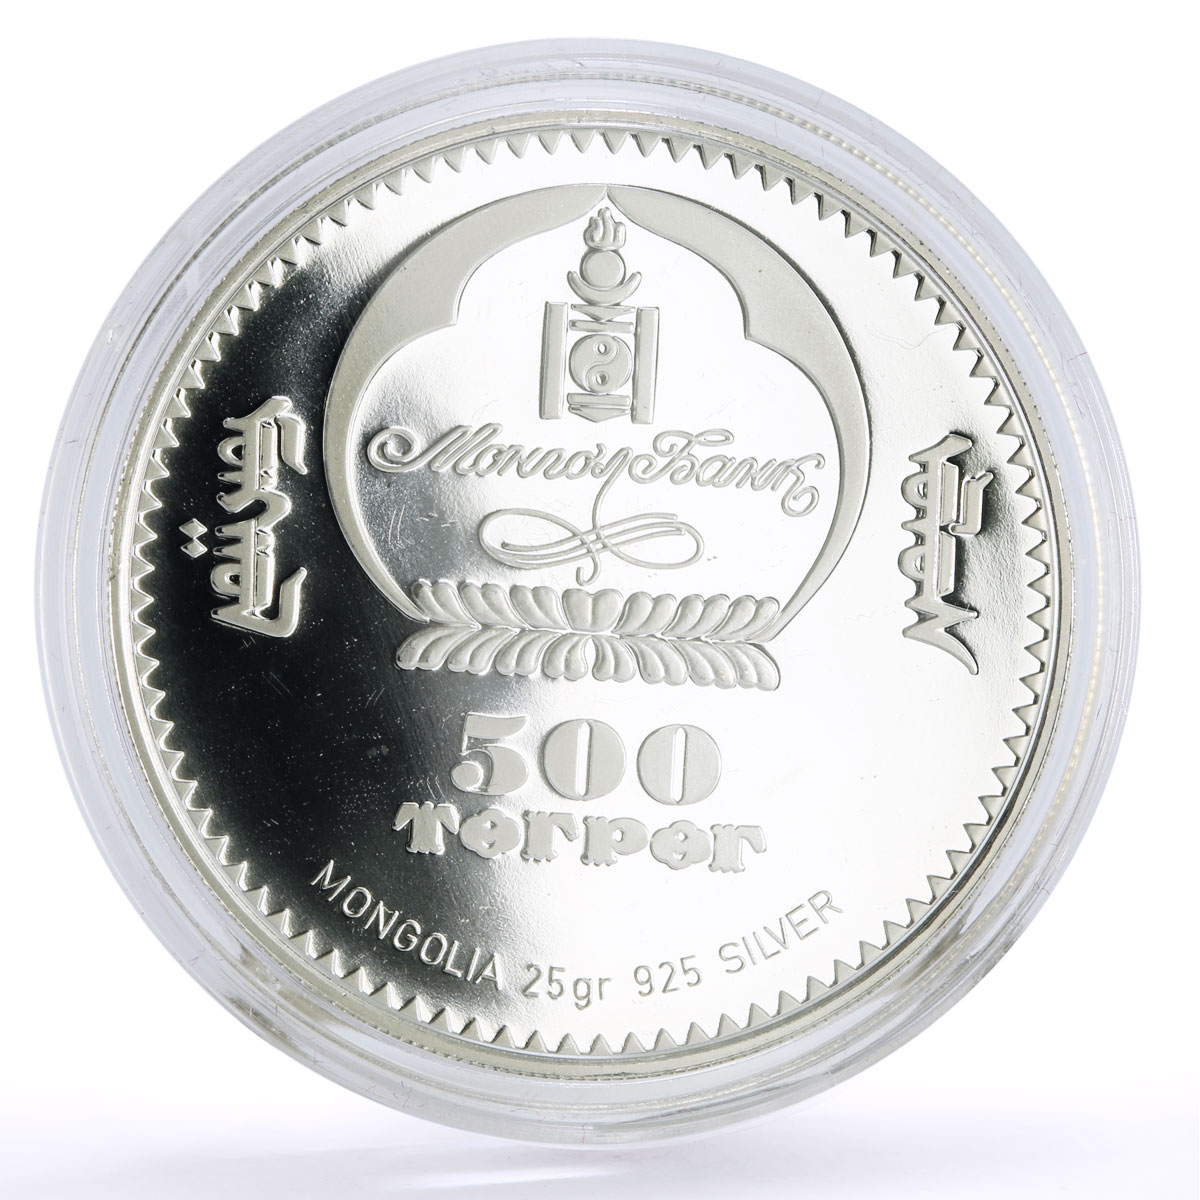 Mongolia 500 togrog New Wonders Peru Machu Picchu colored proof silver coin 2008